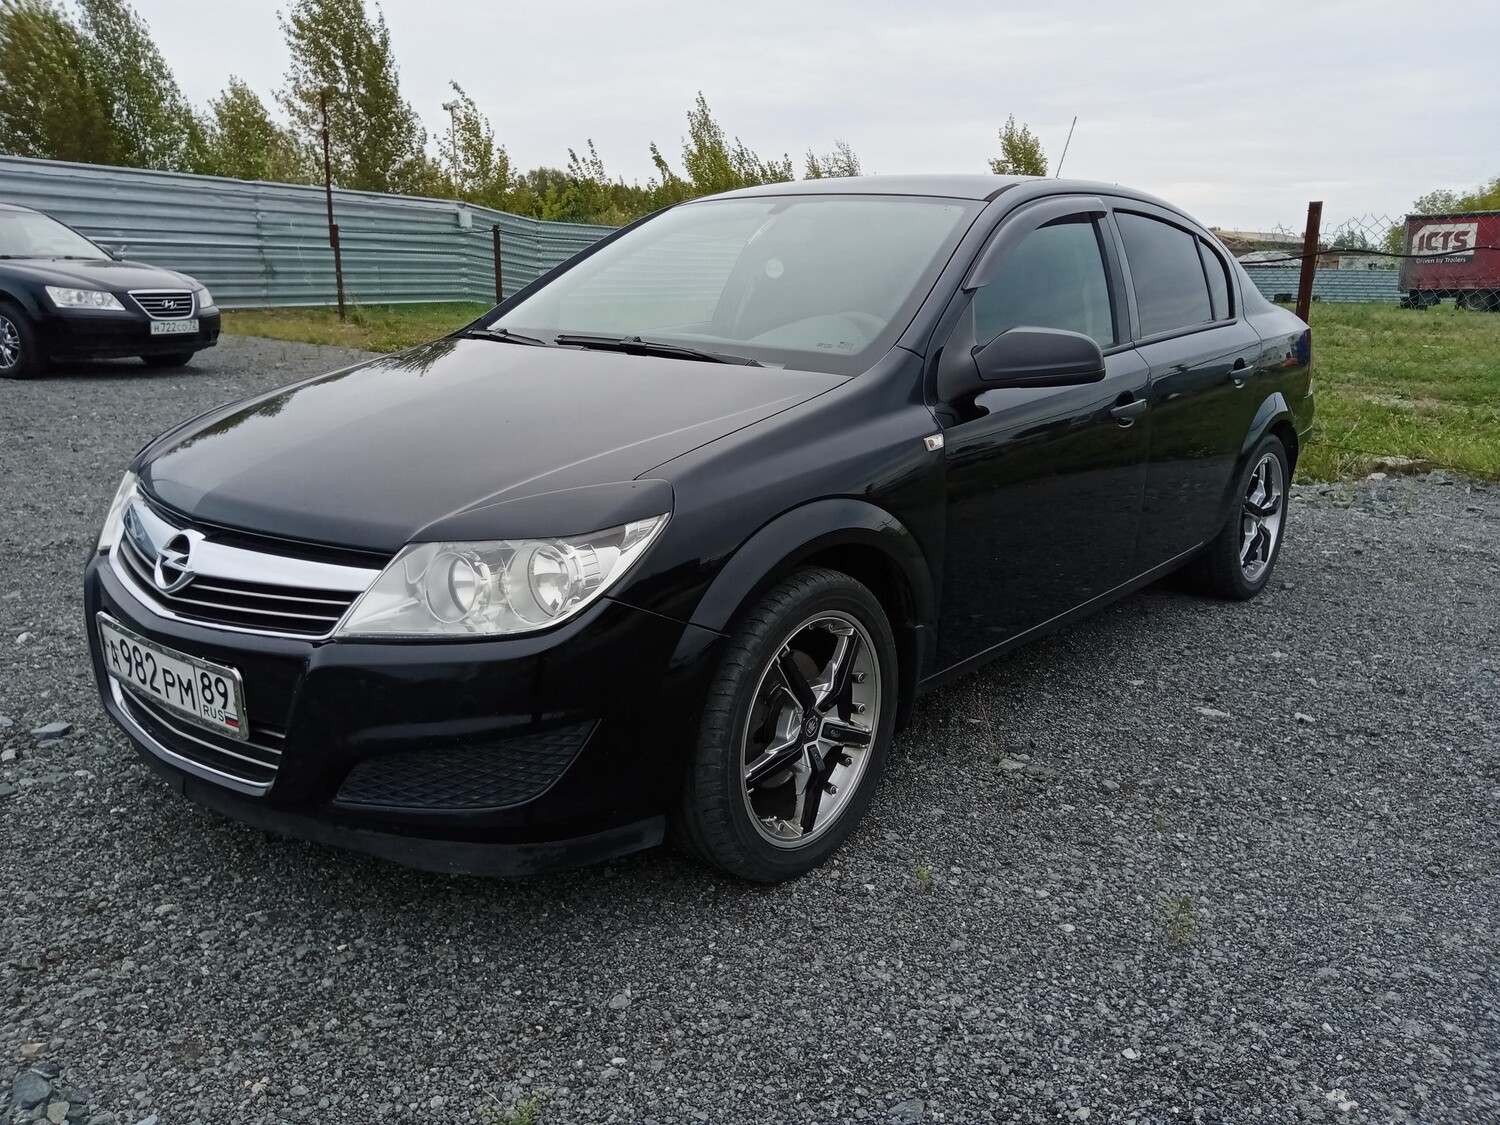 Opel Astra, 2009 г.в